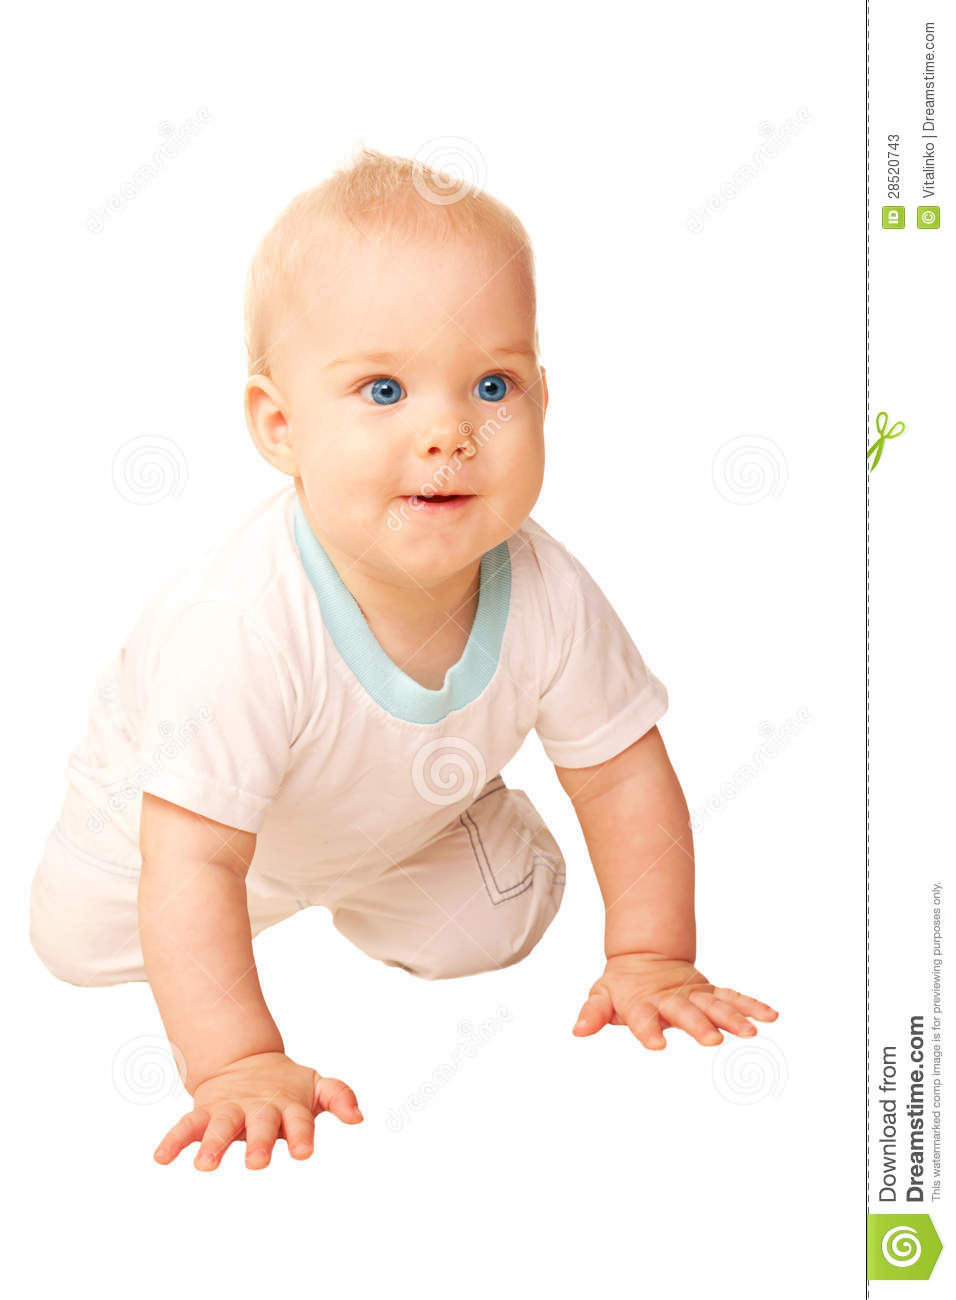 Happy Baby Crawling Away  Stock Photos   Image  28520743